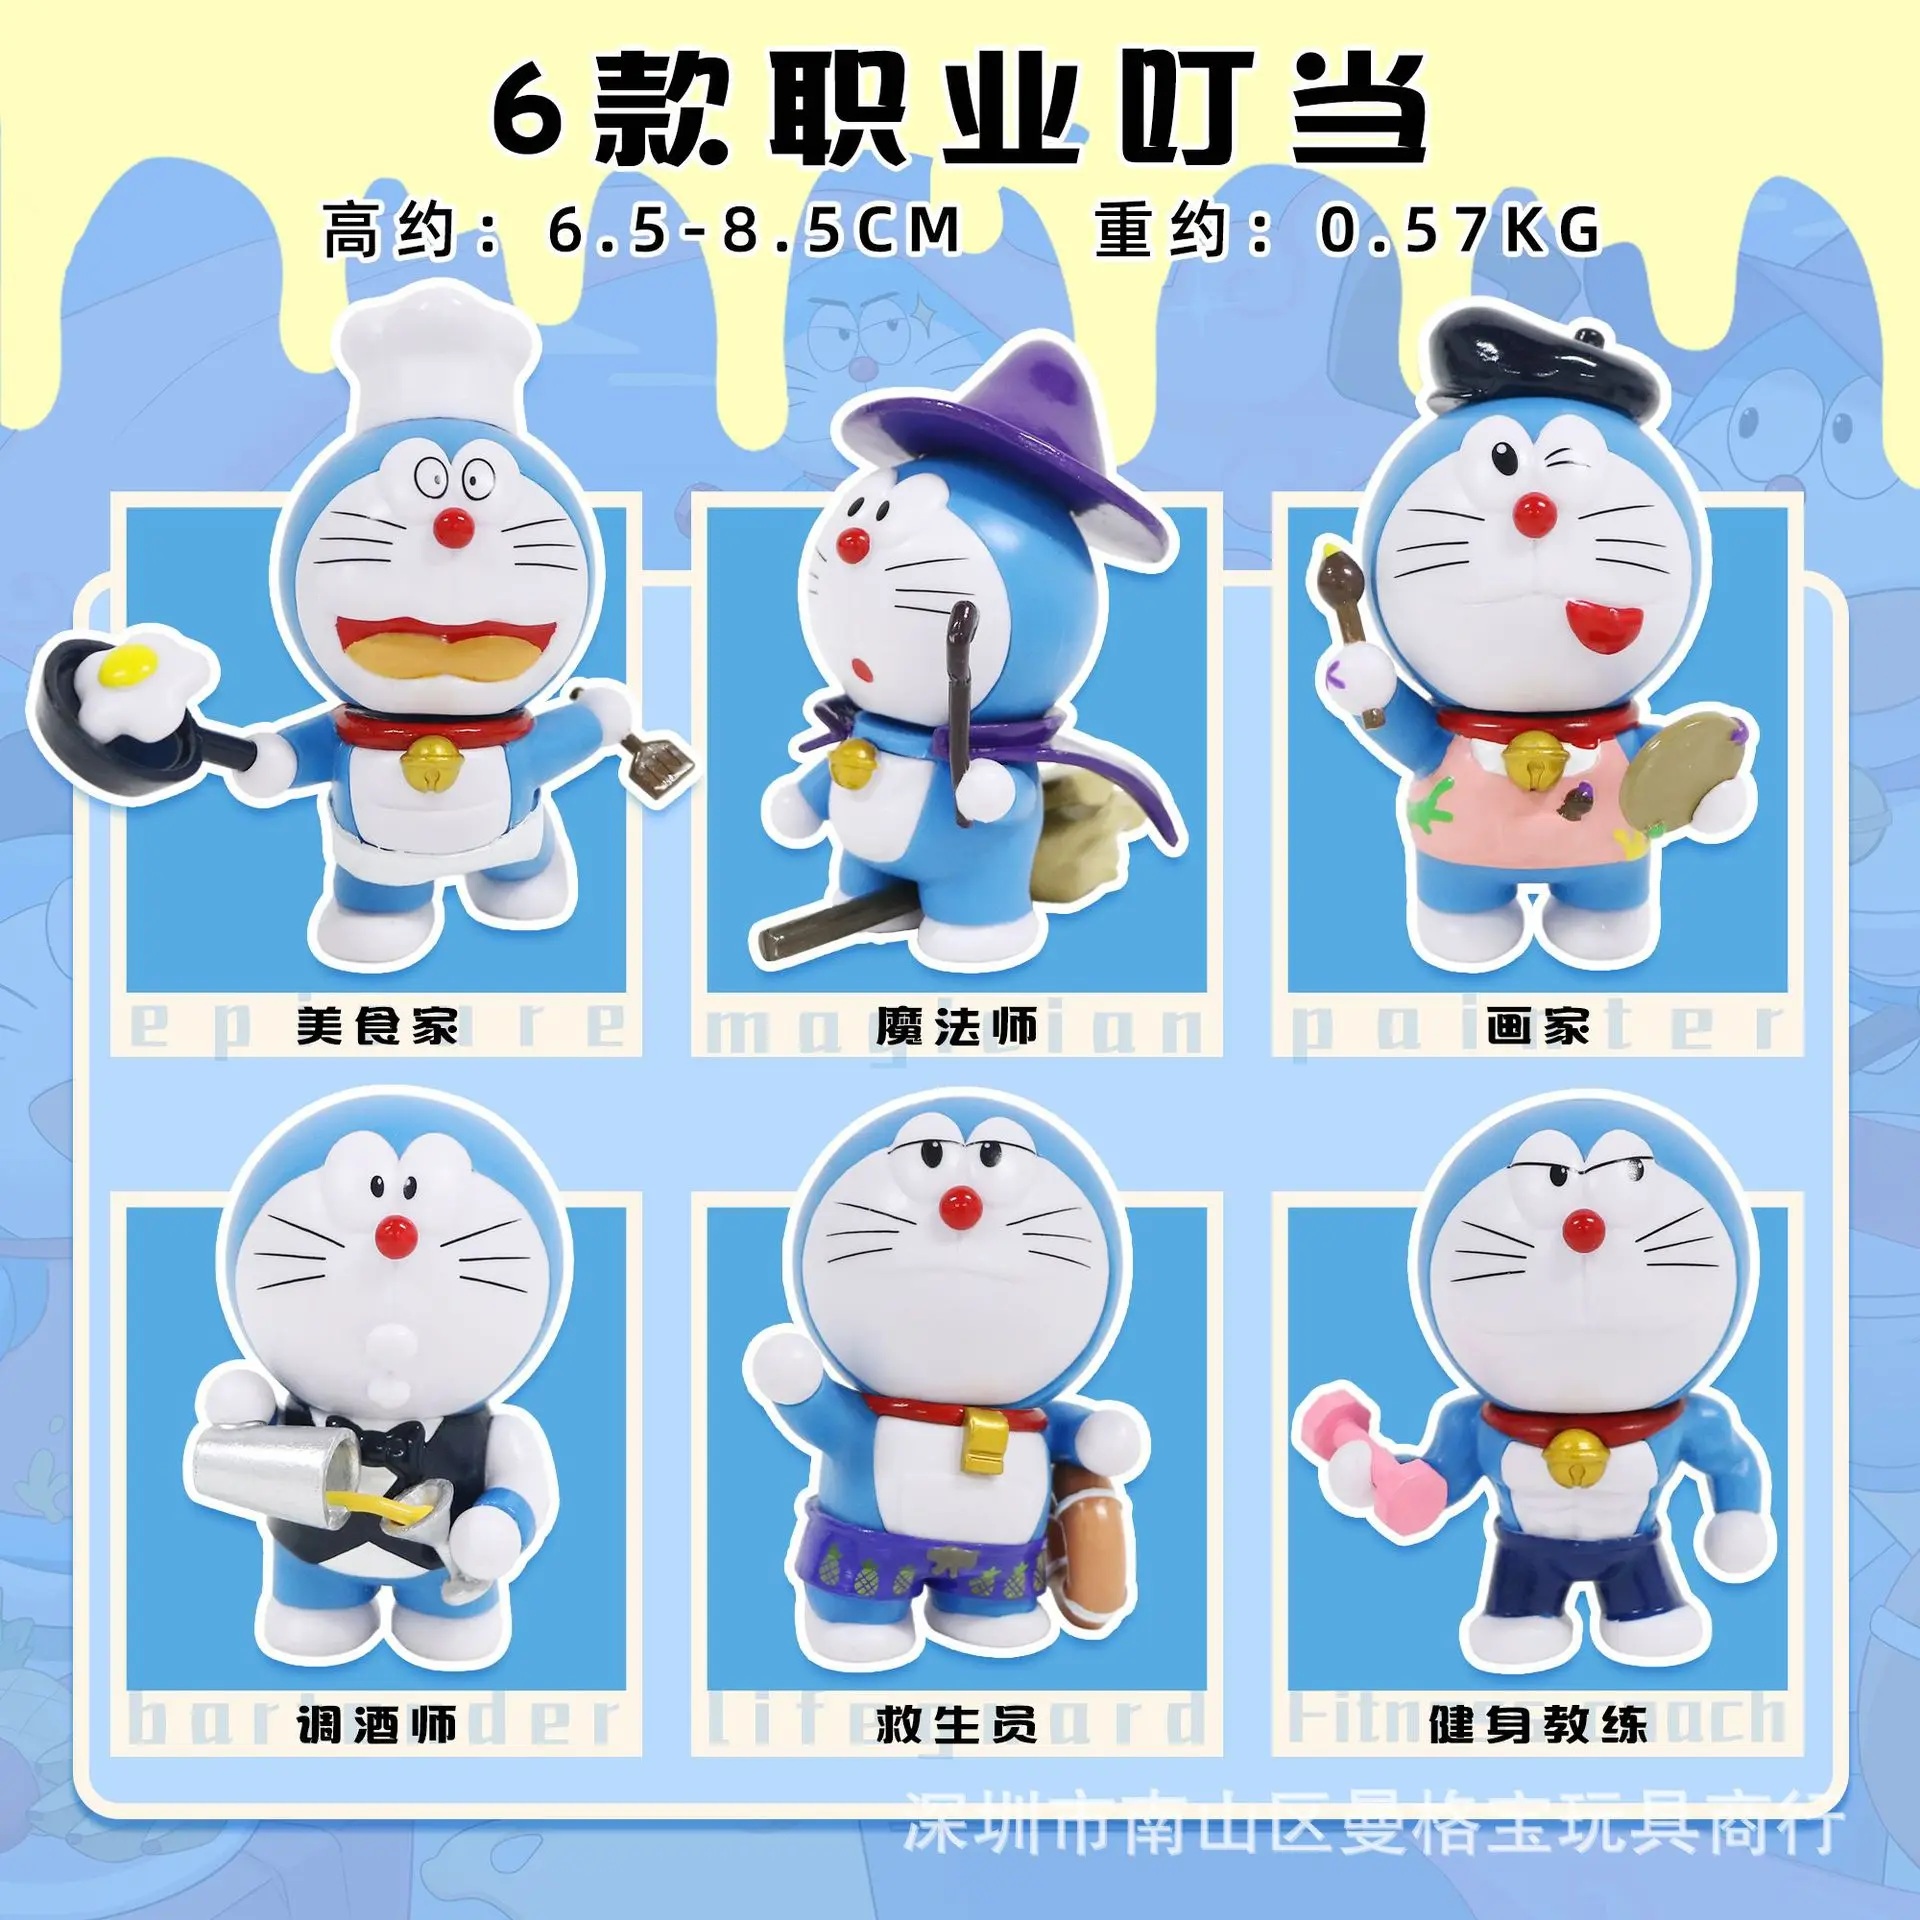 6PCS Set Doraemon Anime Figure Car Home Office Desk Ornament Cartoon Play Figure Birthday Gifts Decorative Figurines Toys Kids